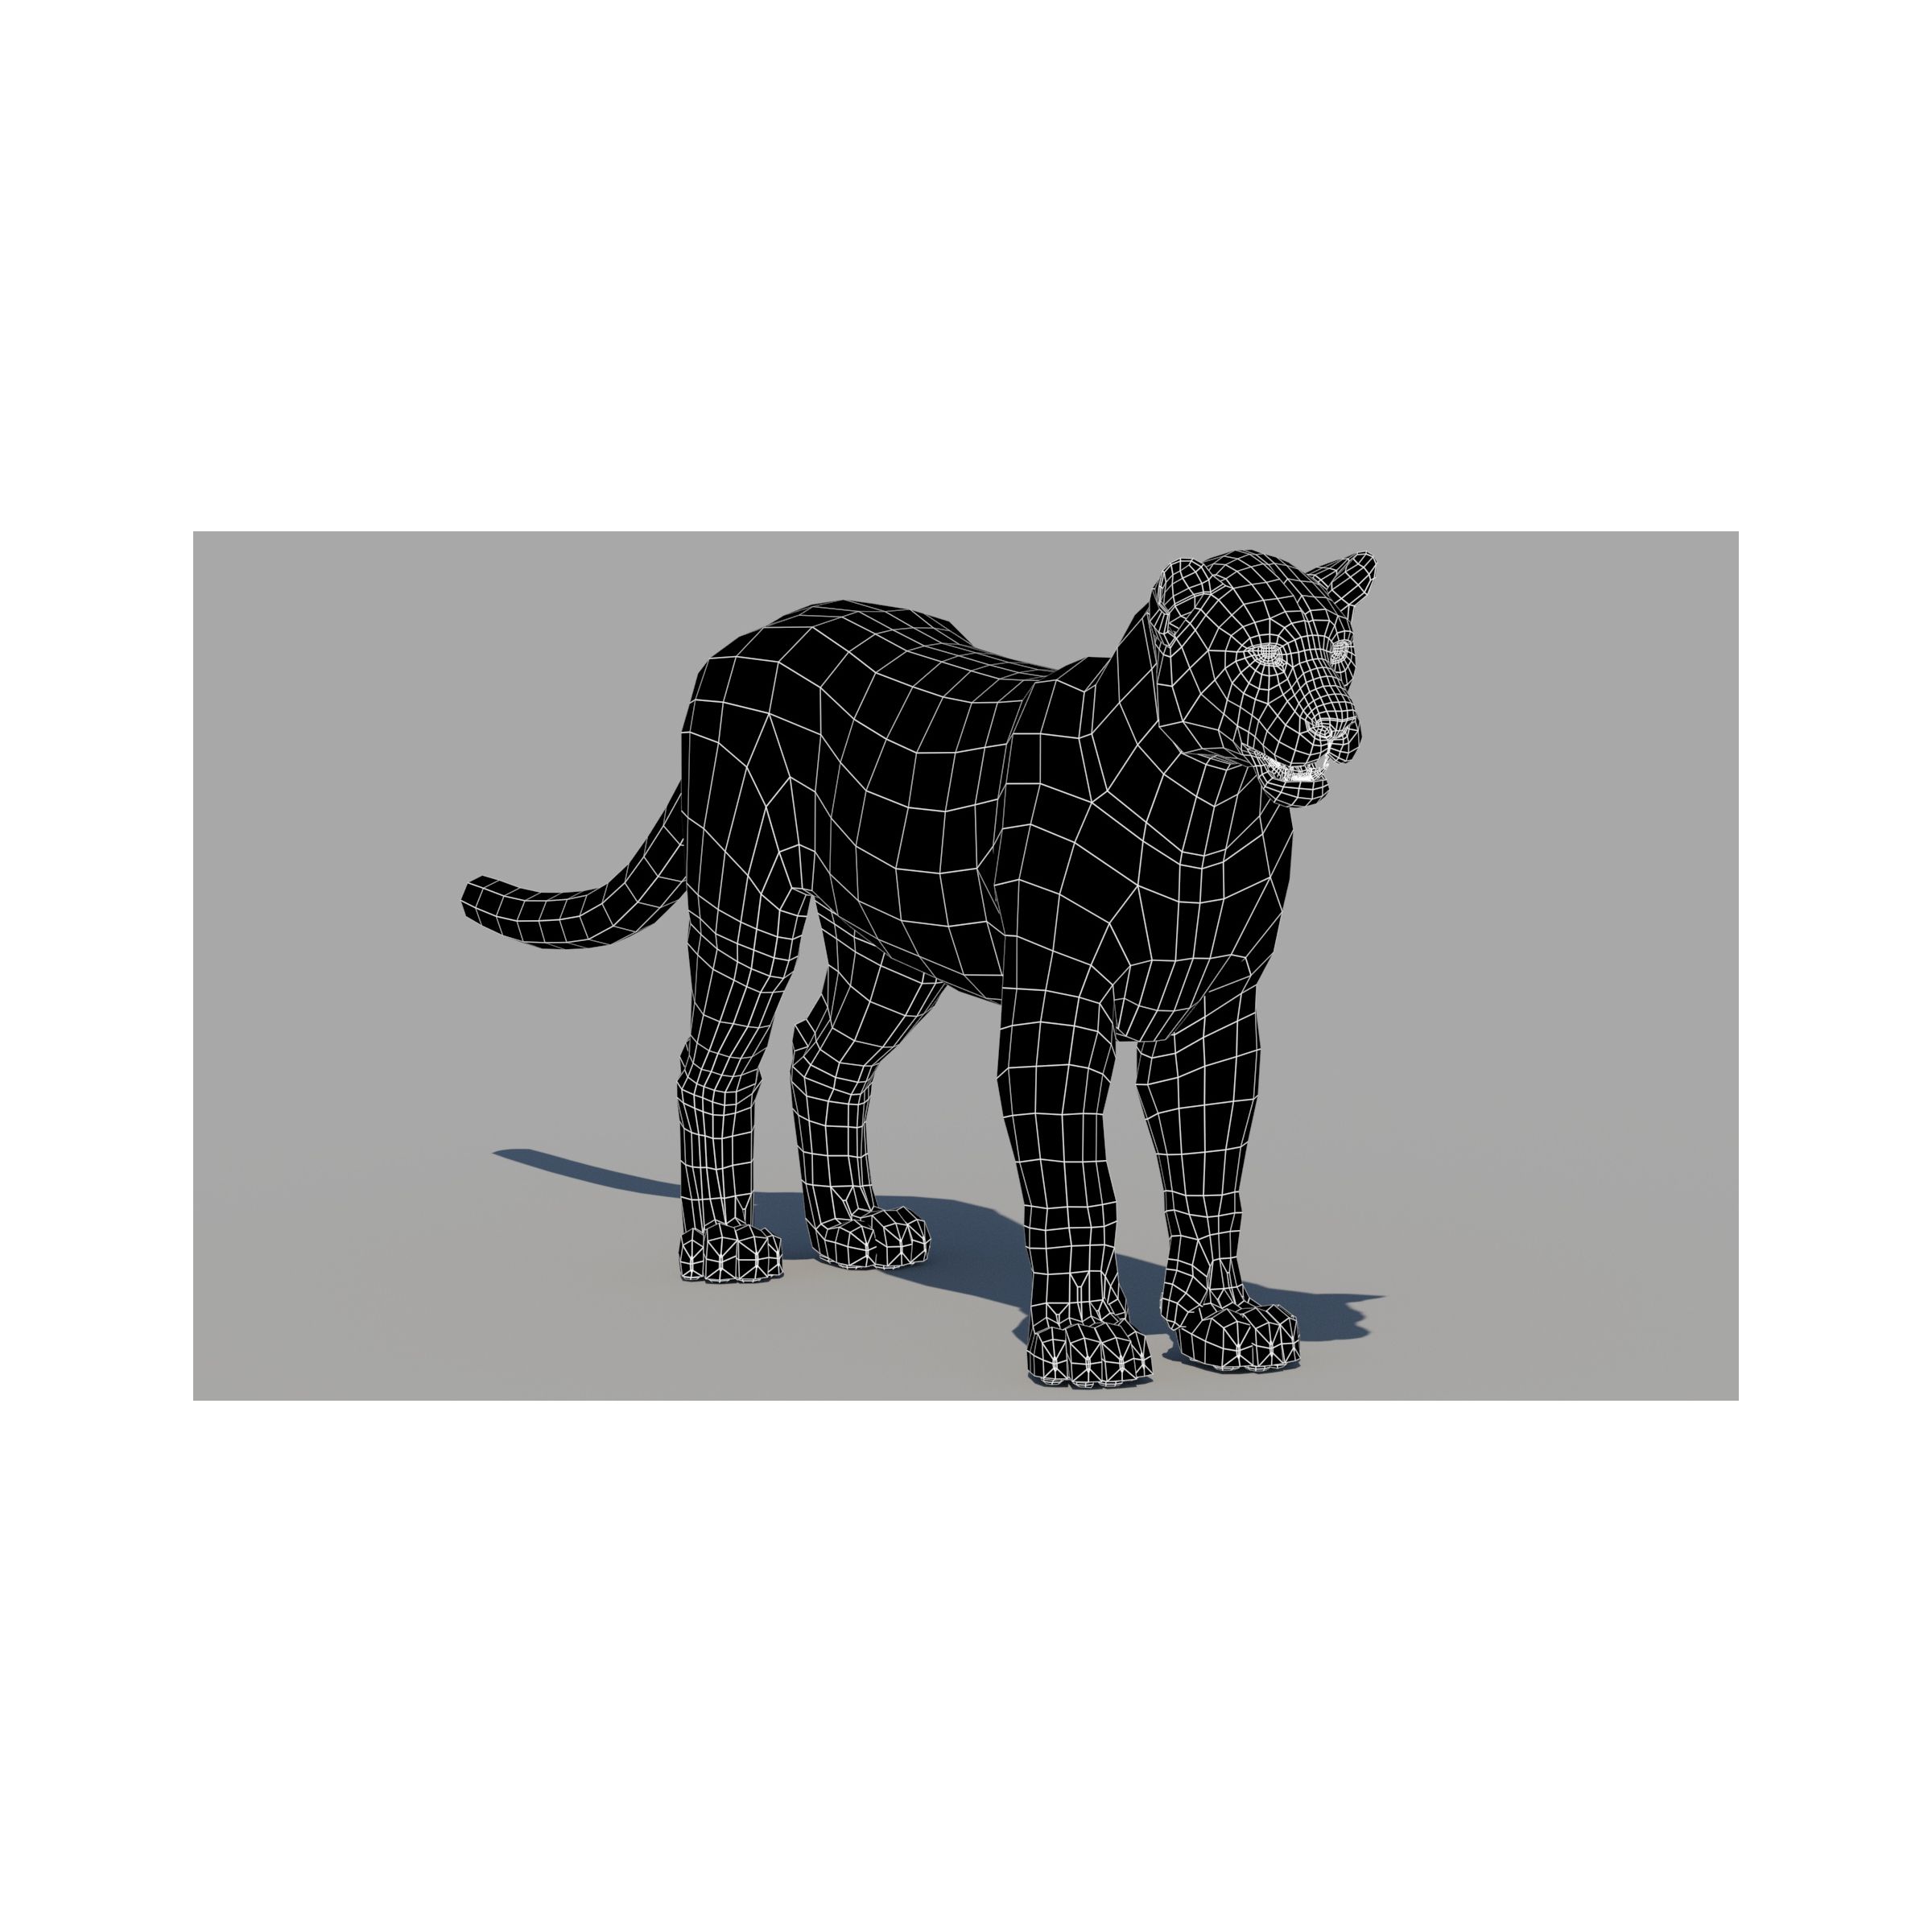 Rigged Leopard: Rigged Sri Lankan Leopard 3D Model for Download - 229$ 